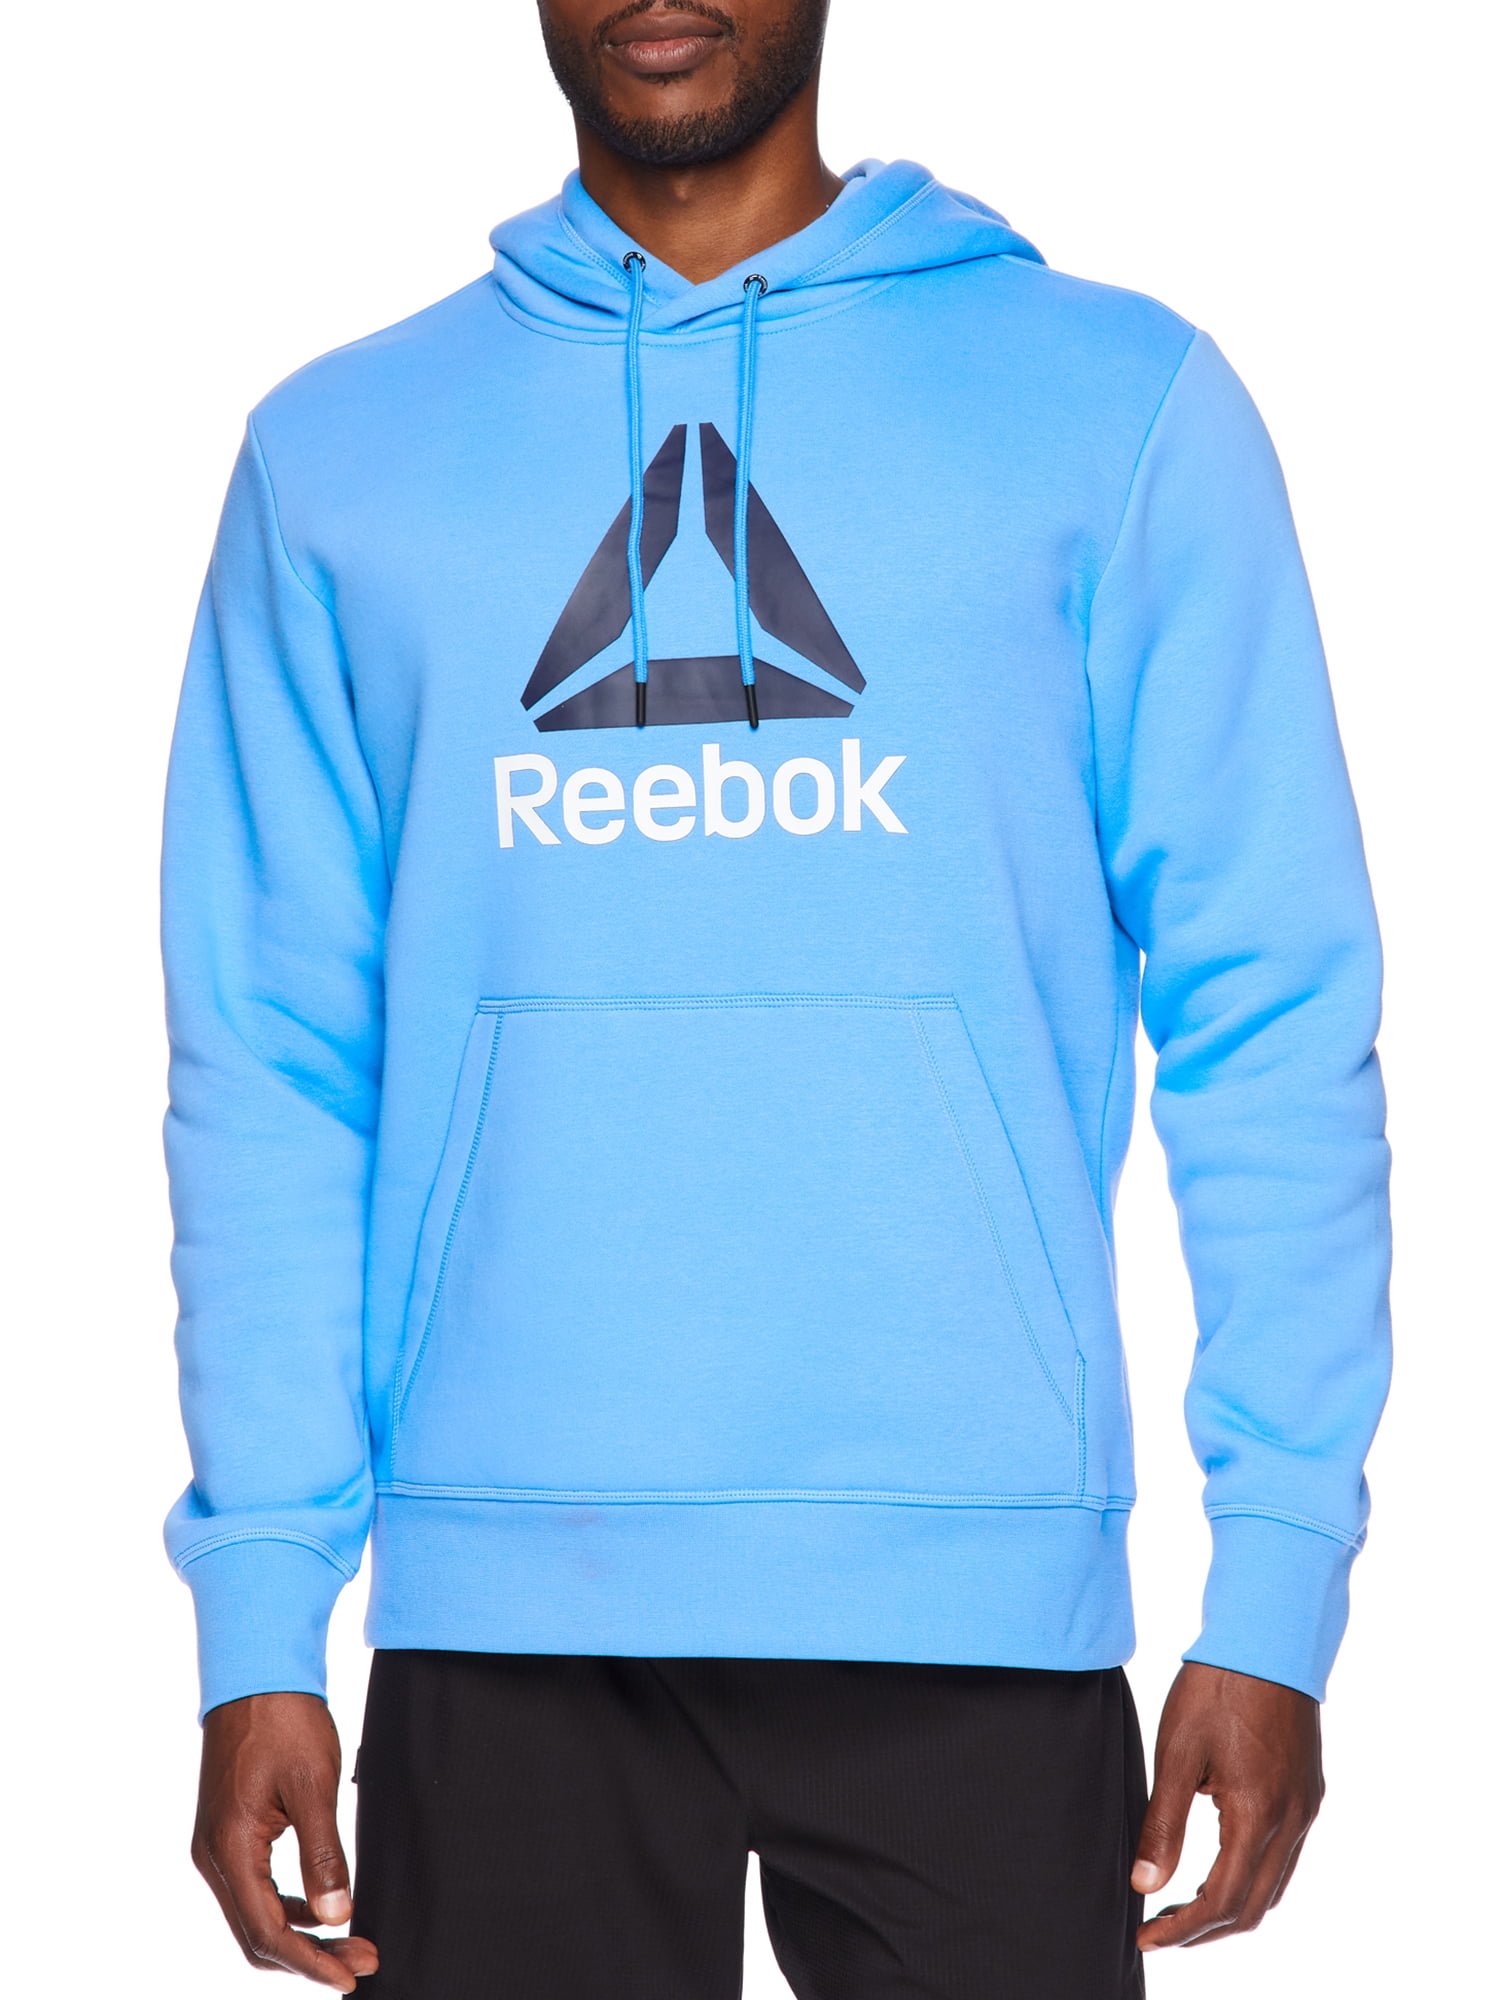 Fleece Pullover Fashion Hoodie Designs and Logos Reebok Boys' Sweatshirt